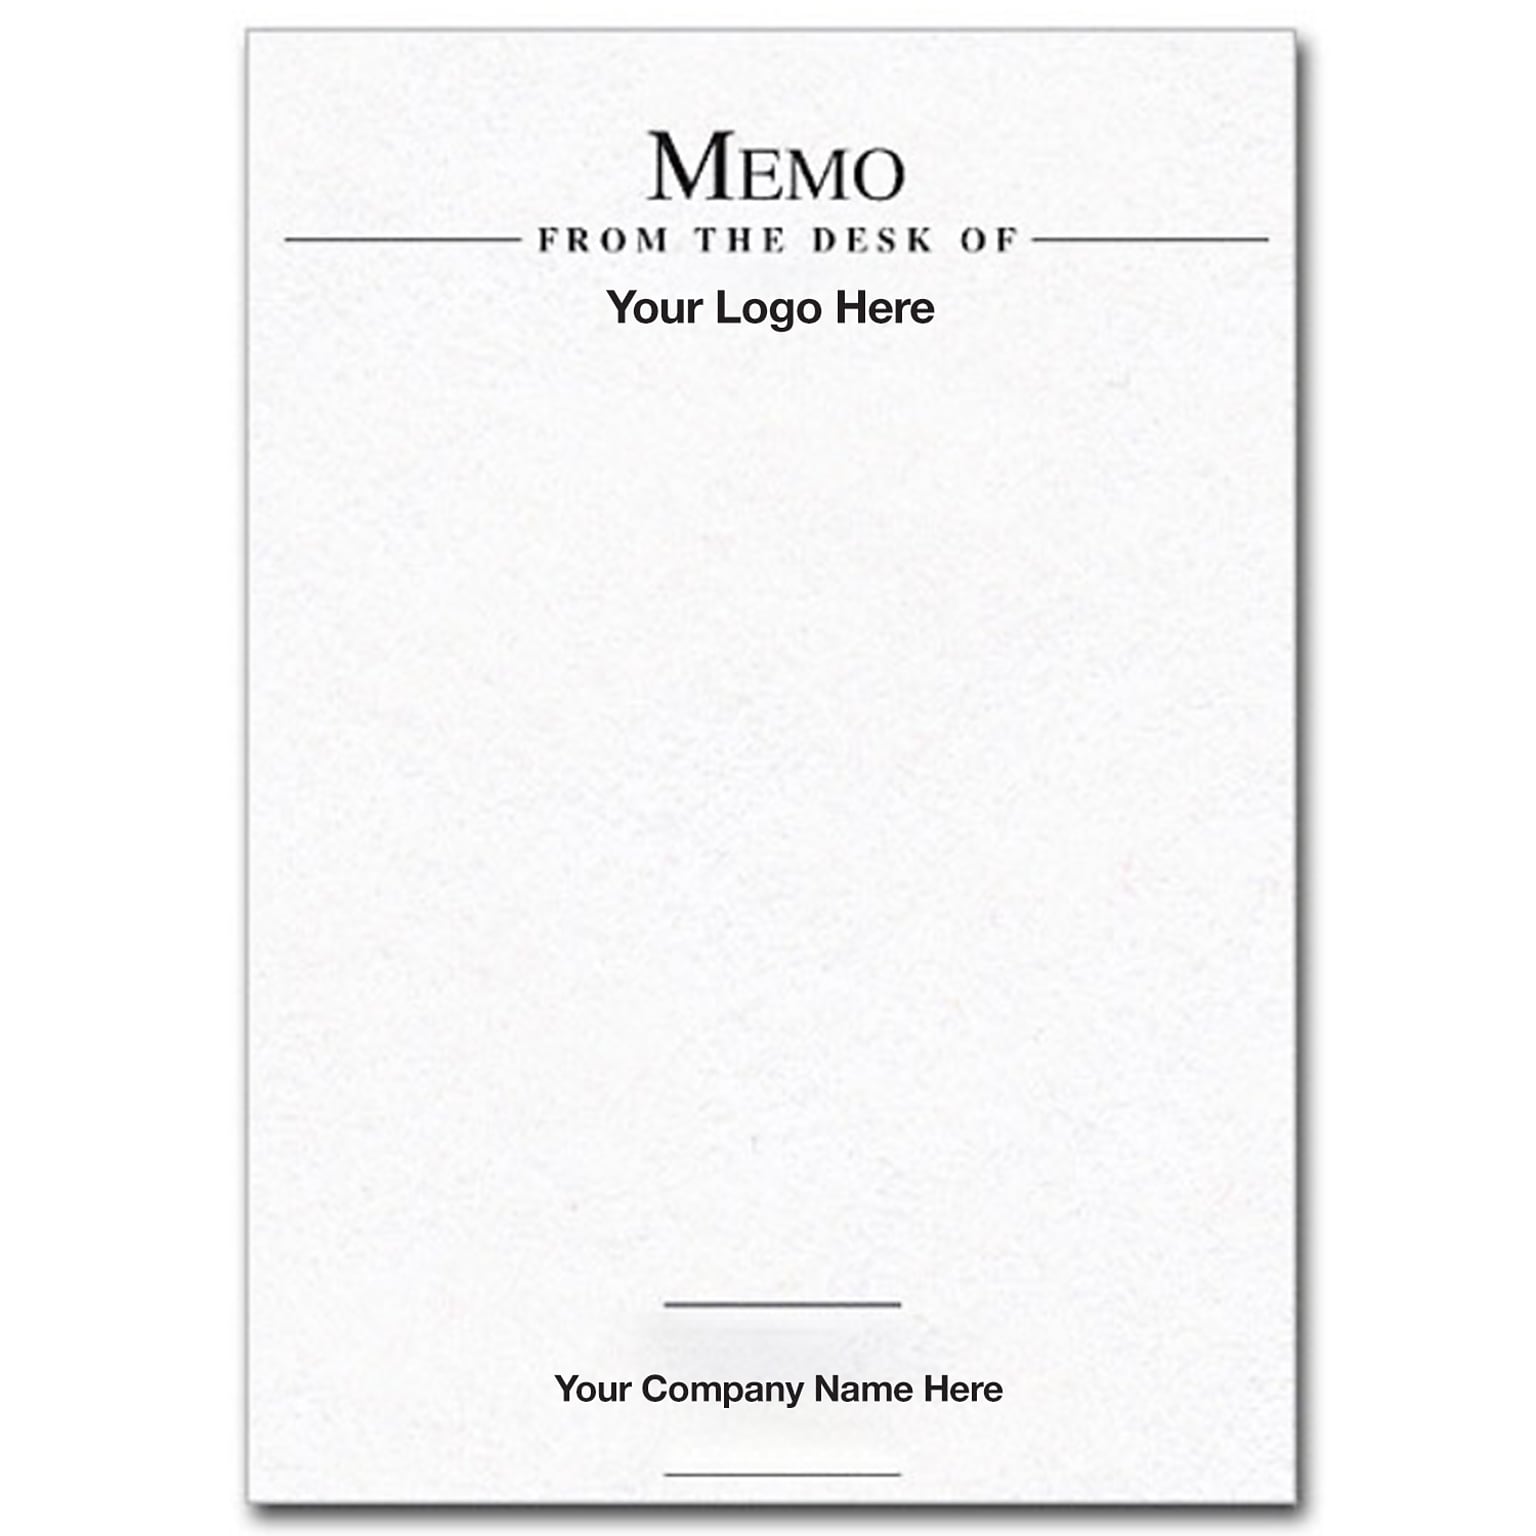 Custom Memo Pads, Canary 60# Text Stock, 8.5 x 5.5, 1 Standard Ink, Flat Ink, 100 Sheets per Pad